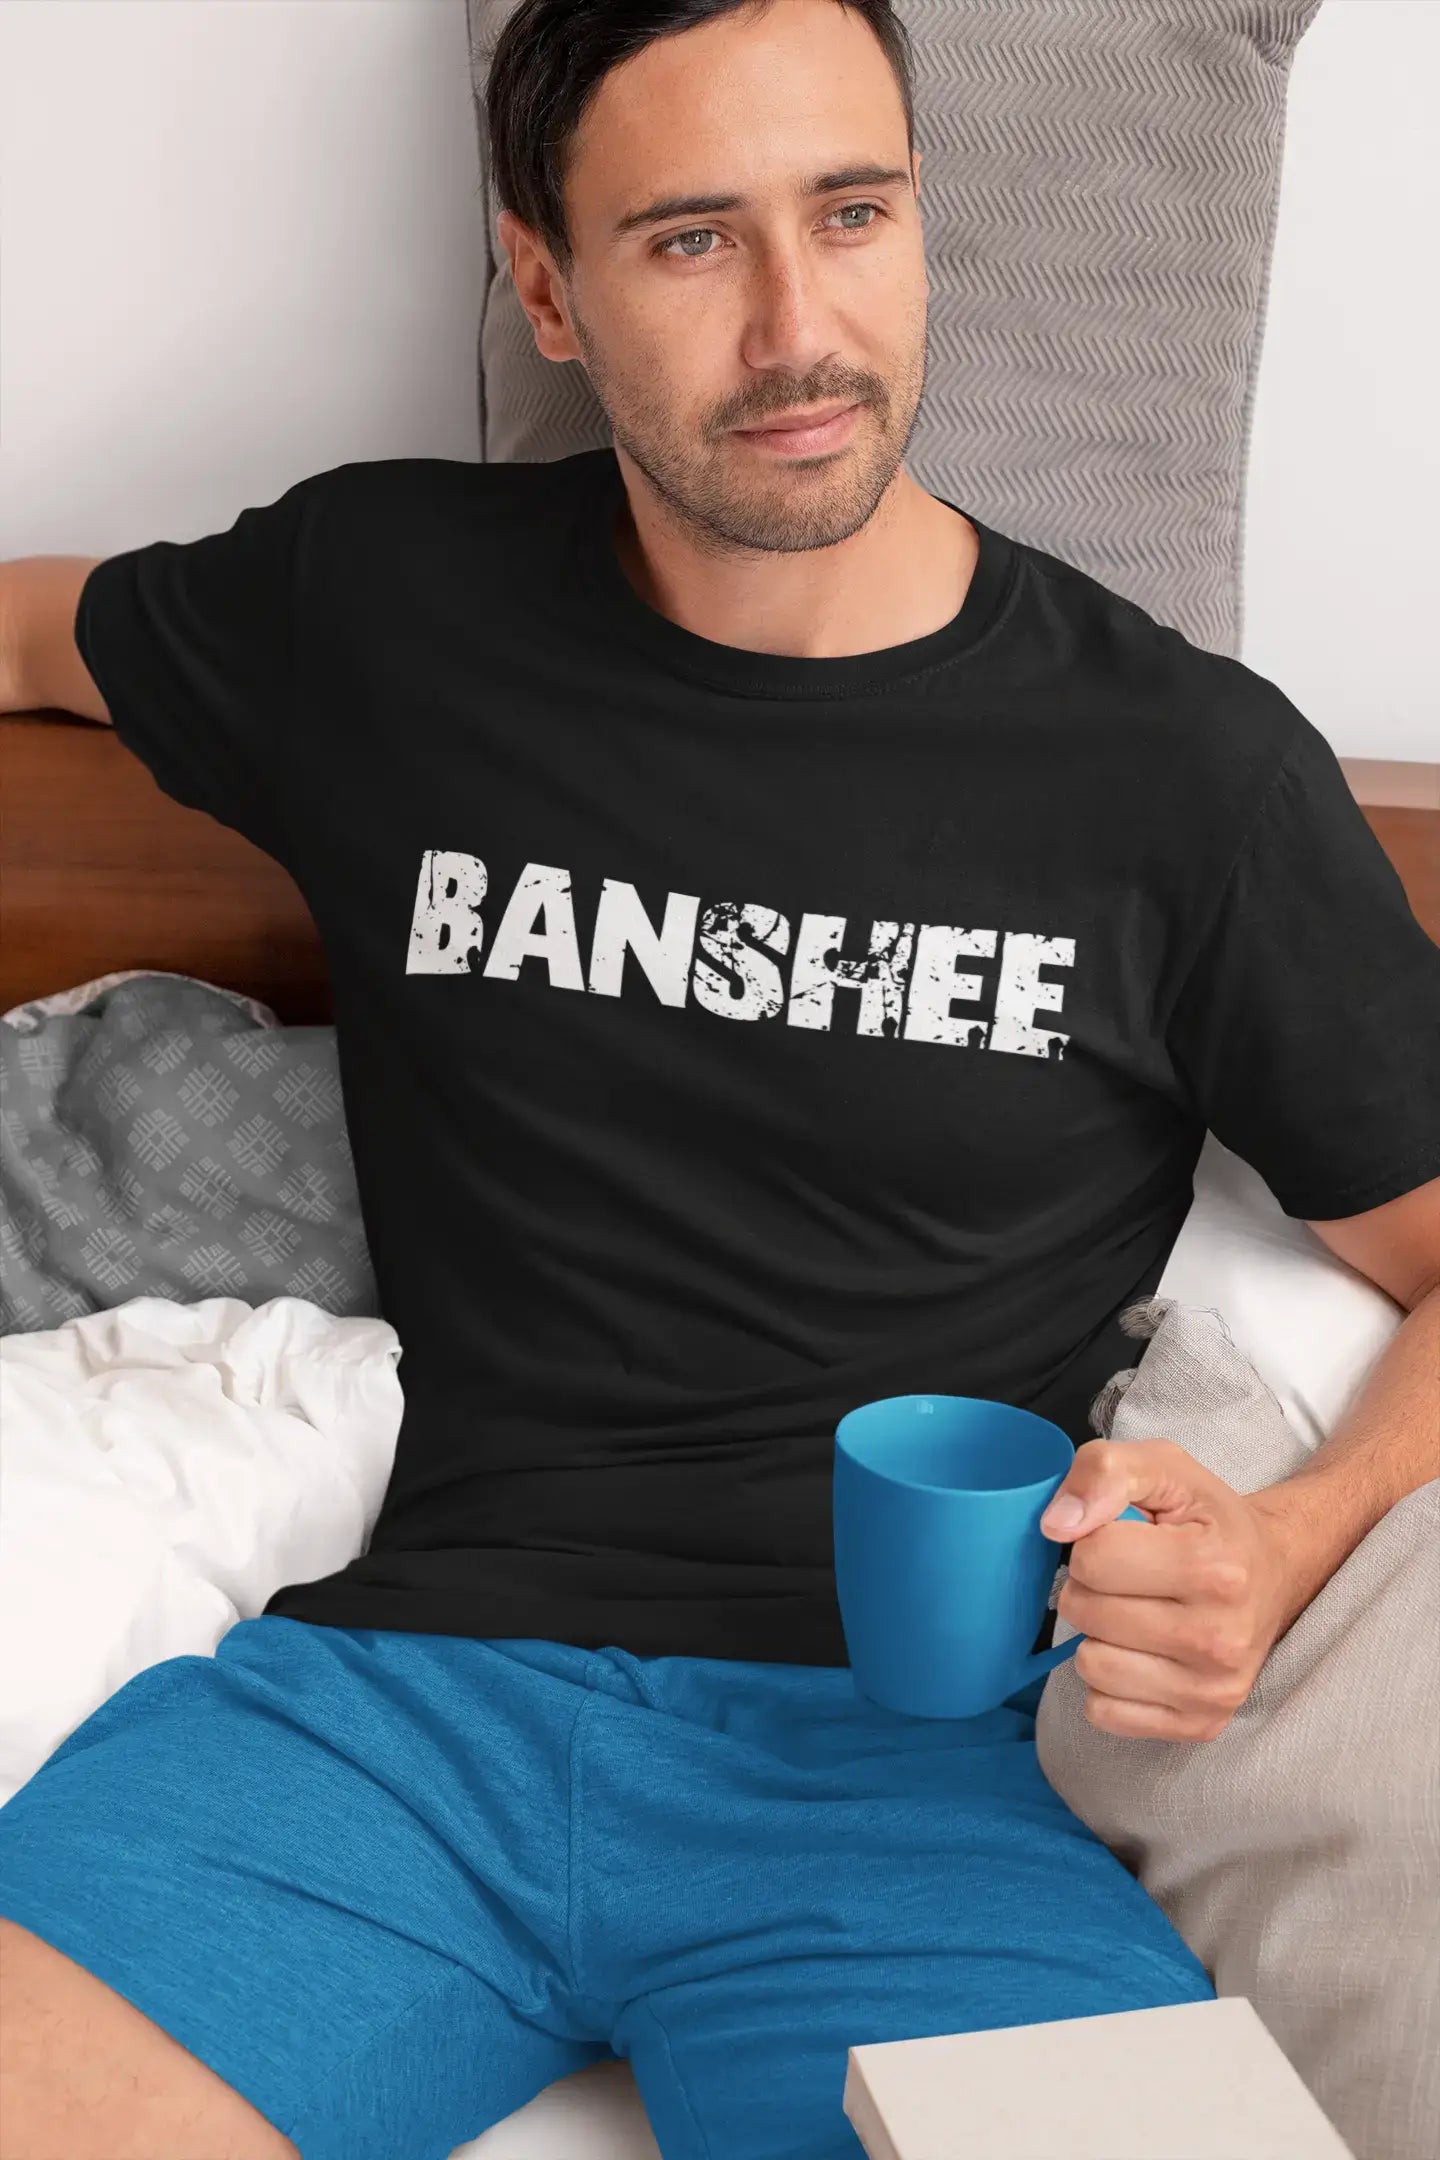 banshee Herren Vintage T-Shirt Schwarz Geburtstagsgeschenk 00555